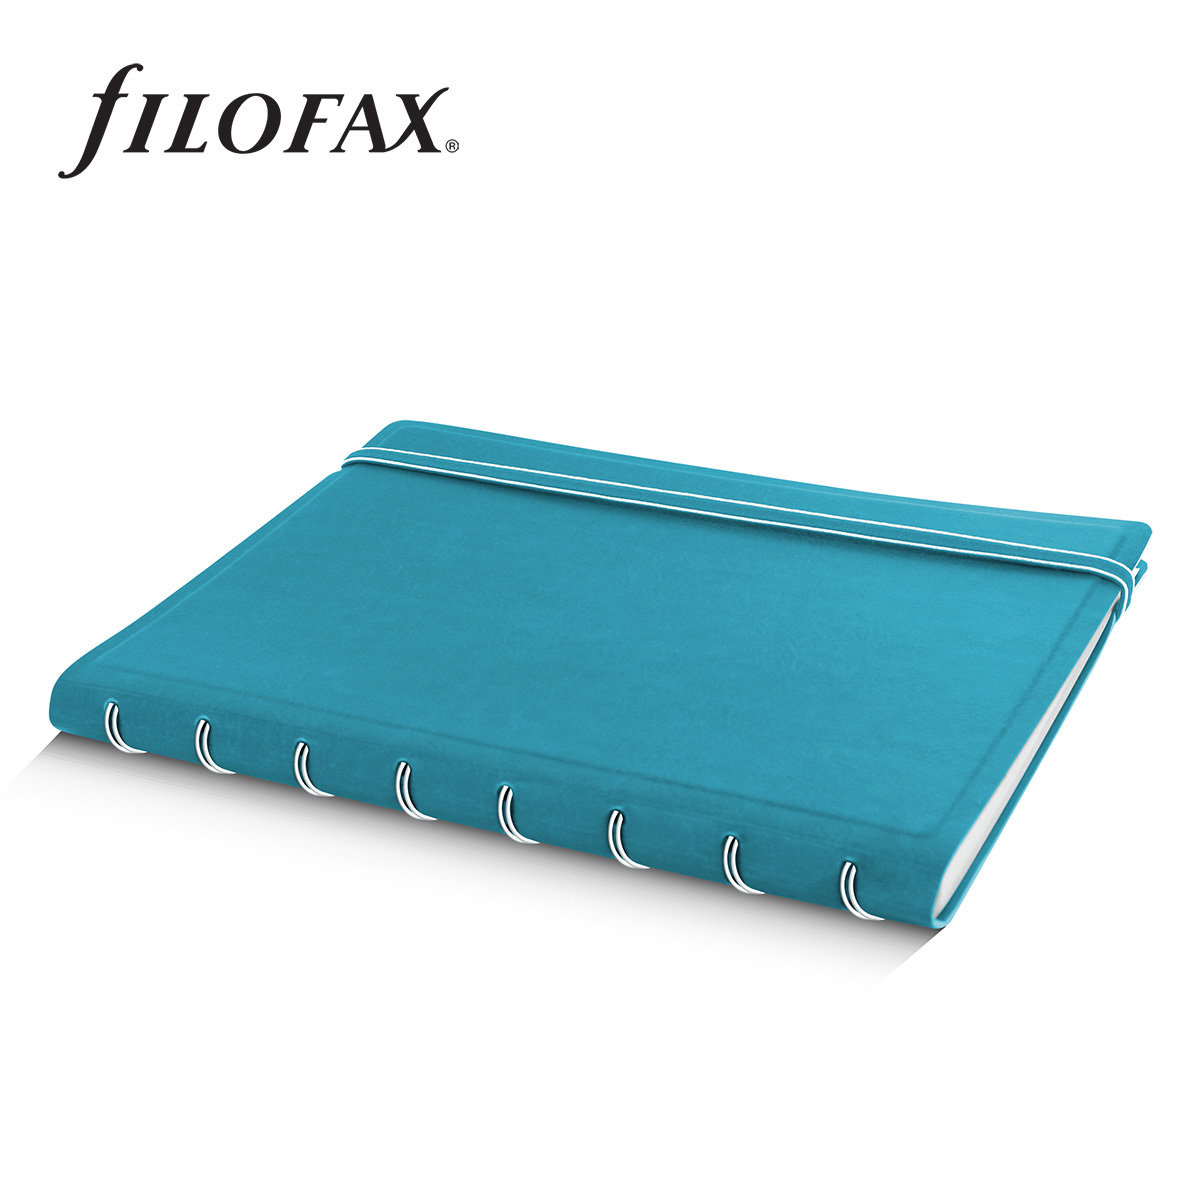 Filofax Notebook Classic A5 Aqua